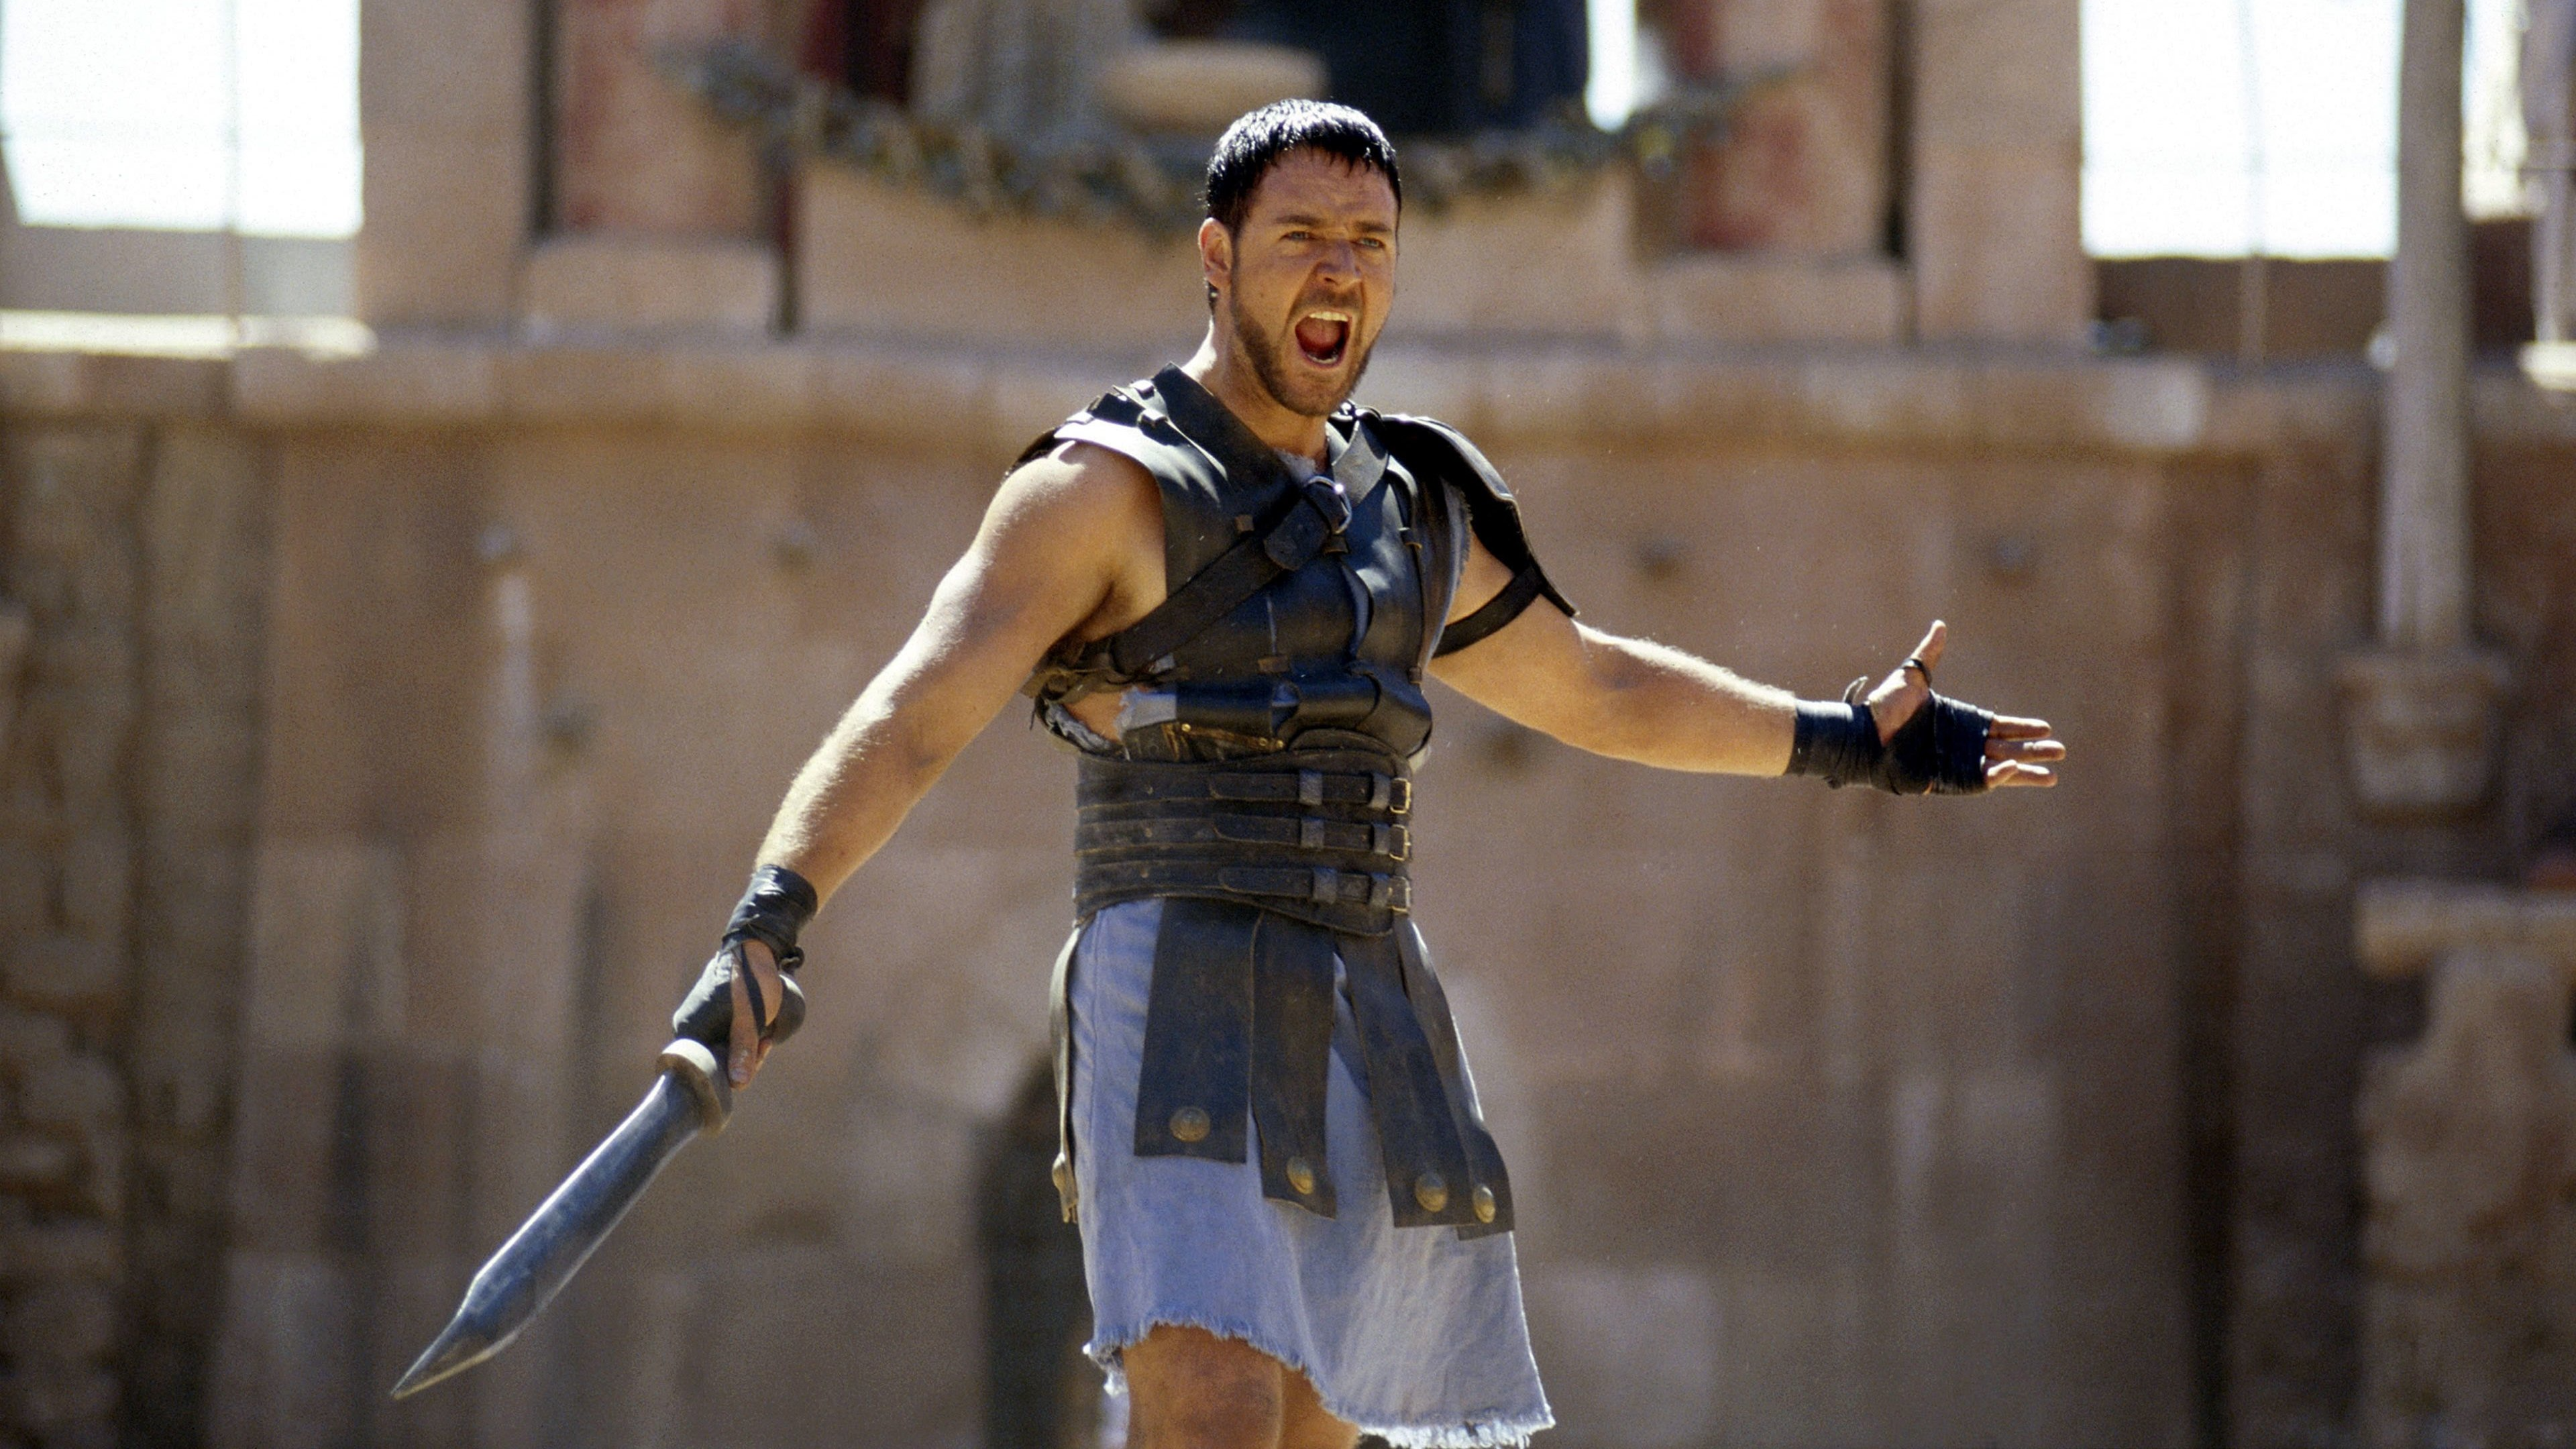 Maximus (Russell Crowe) - Gladiator